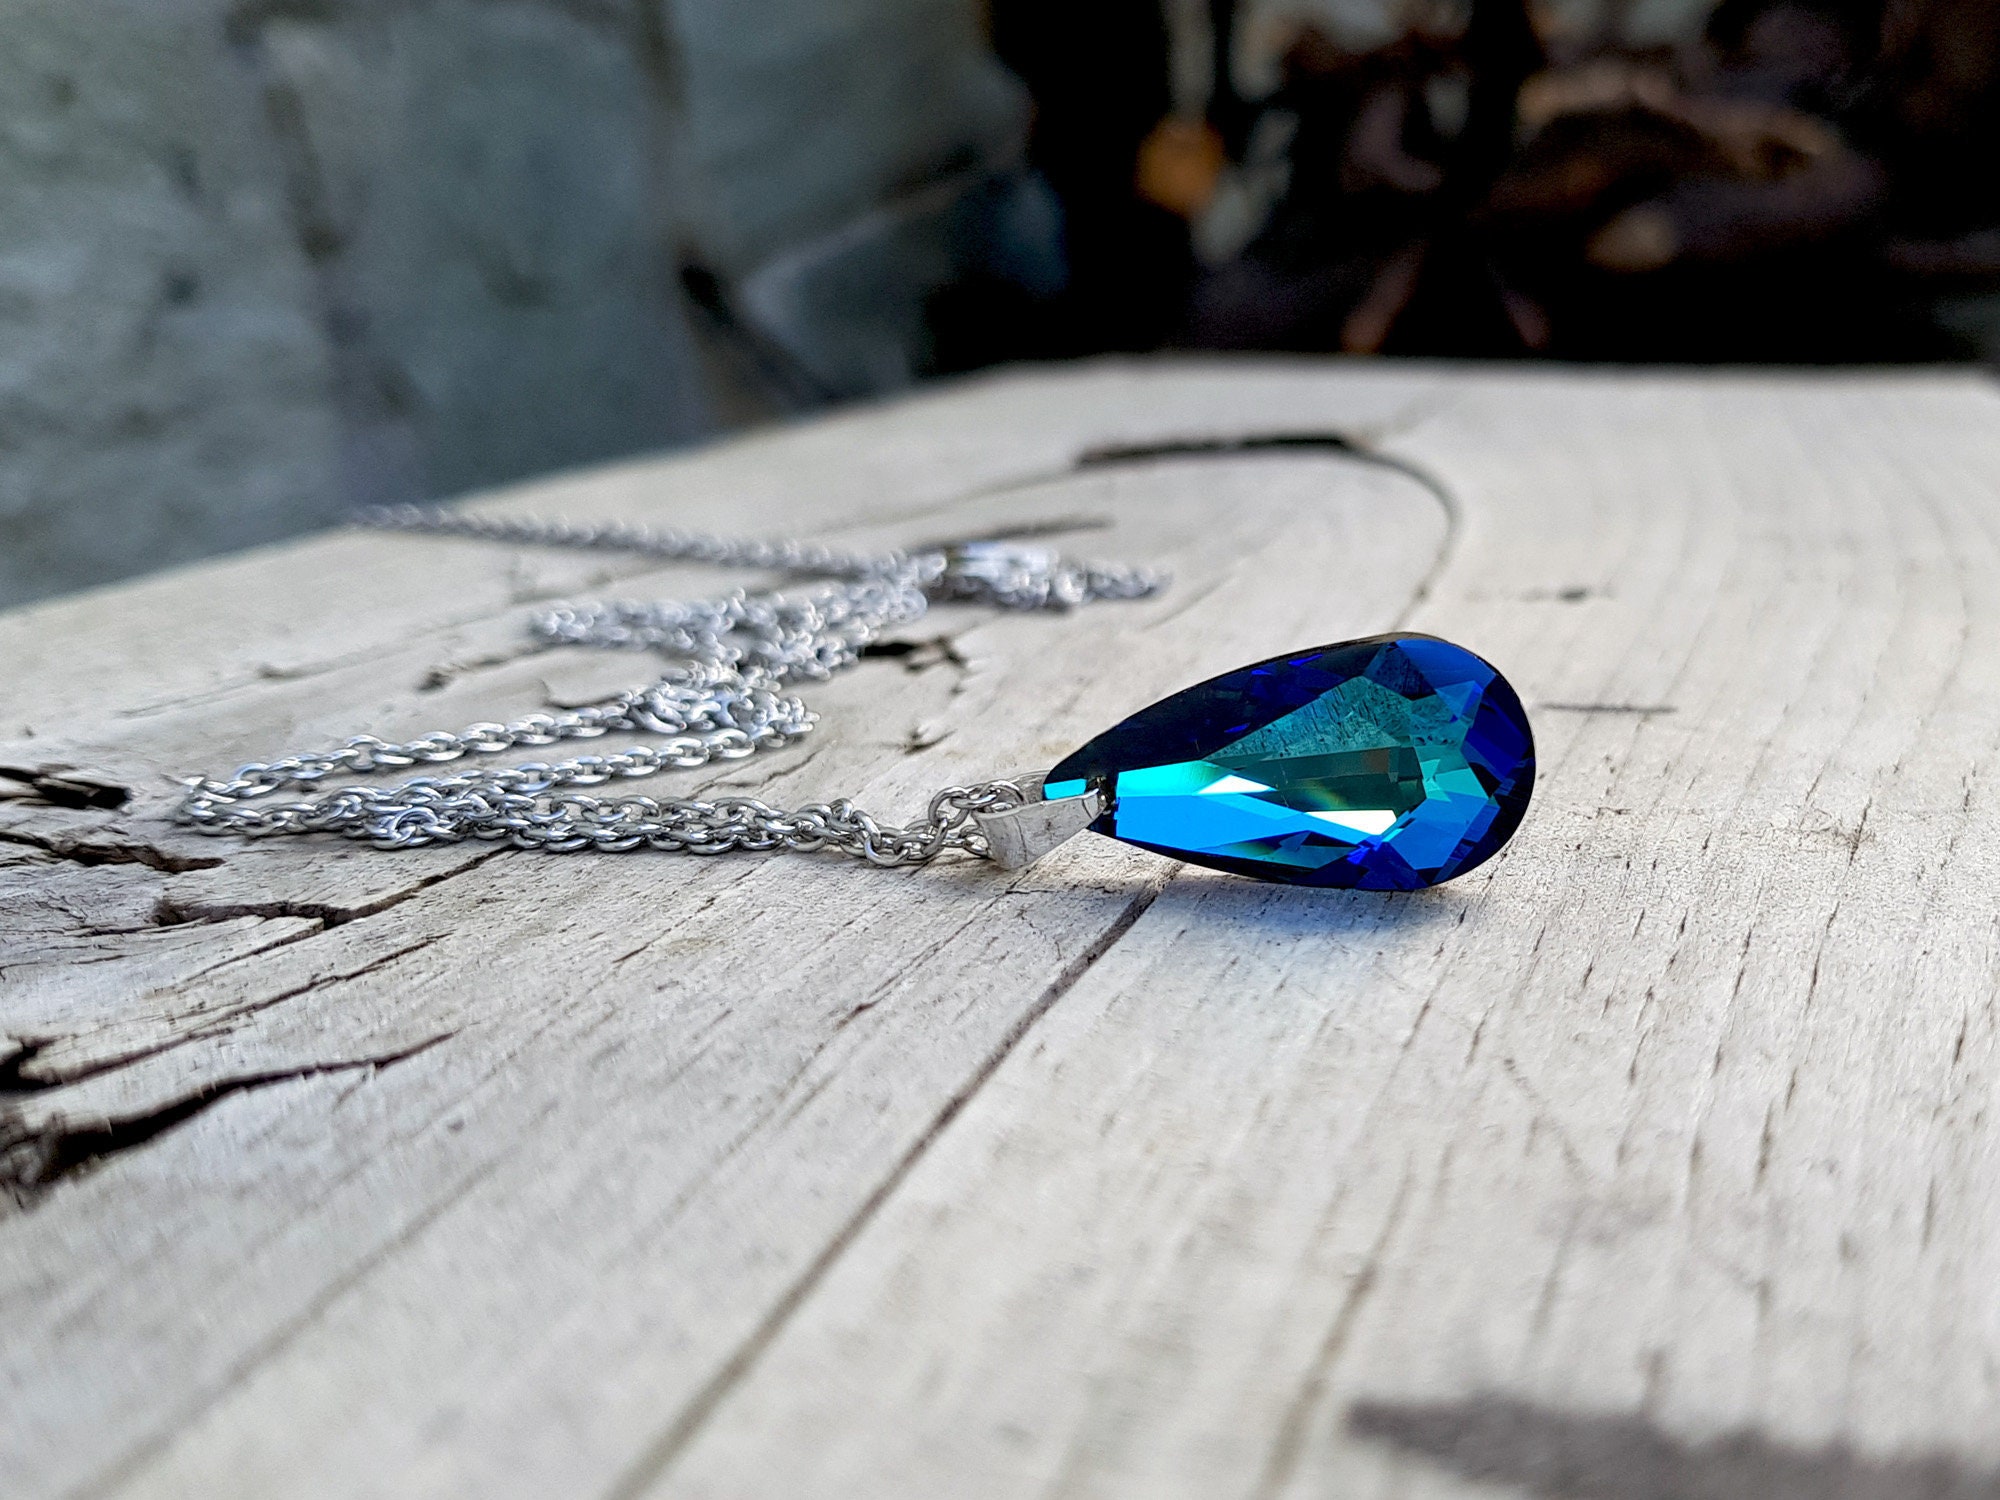 Necklace for man with hematite stones and Swarovski crystal - JoyElly